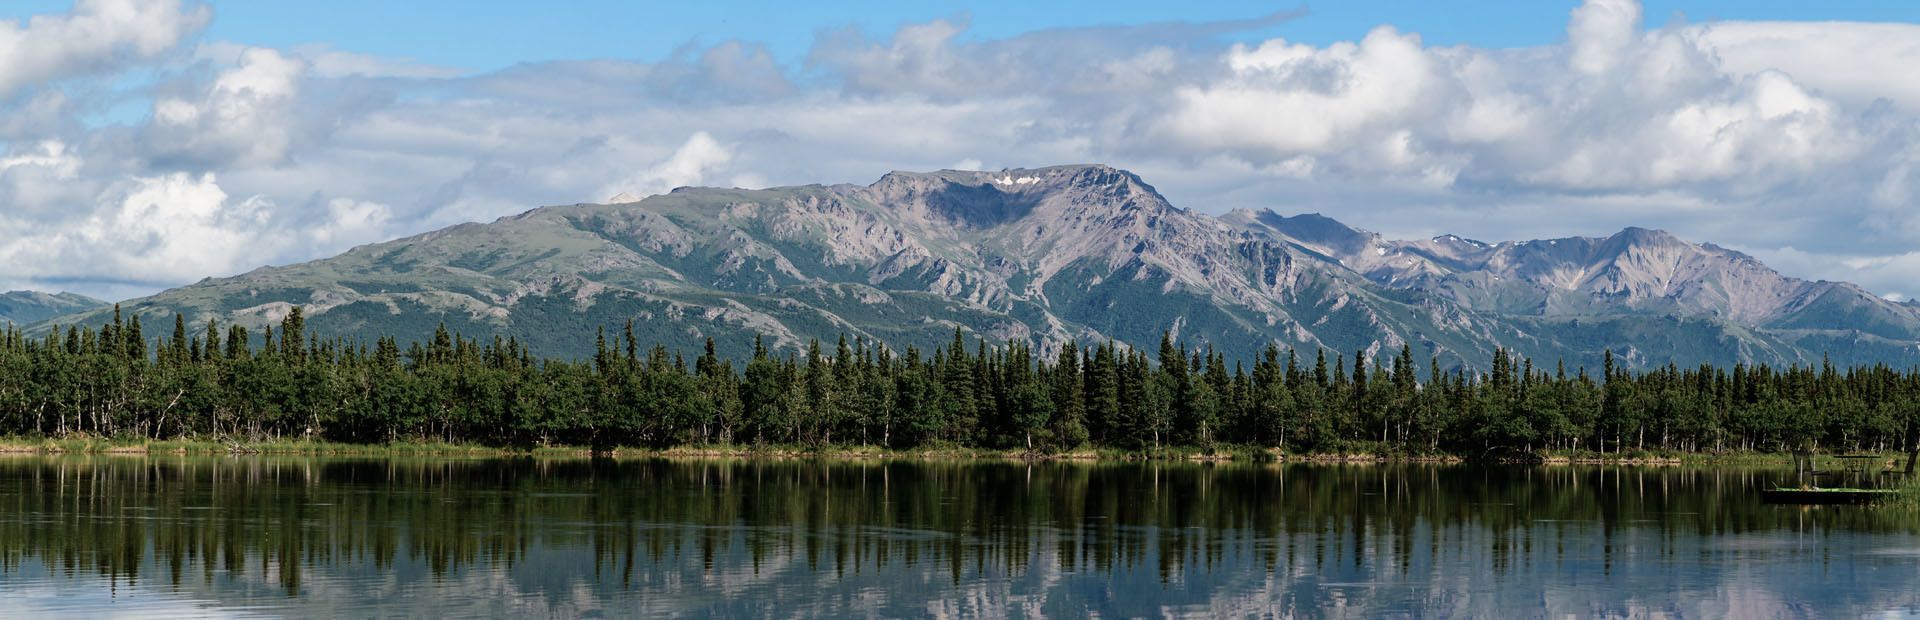 Alaska: Anchorage ed i parchi nazionali